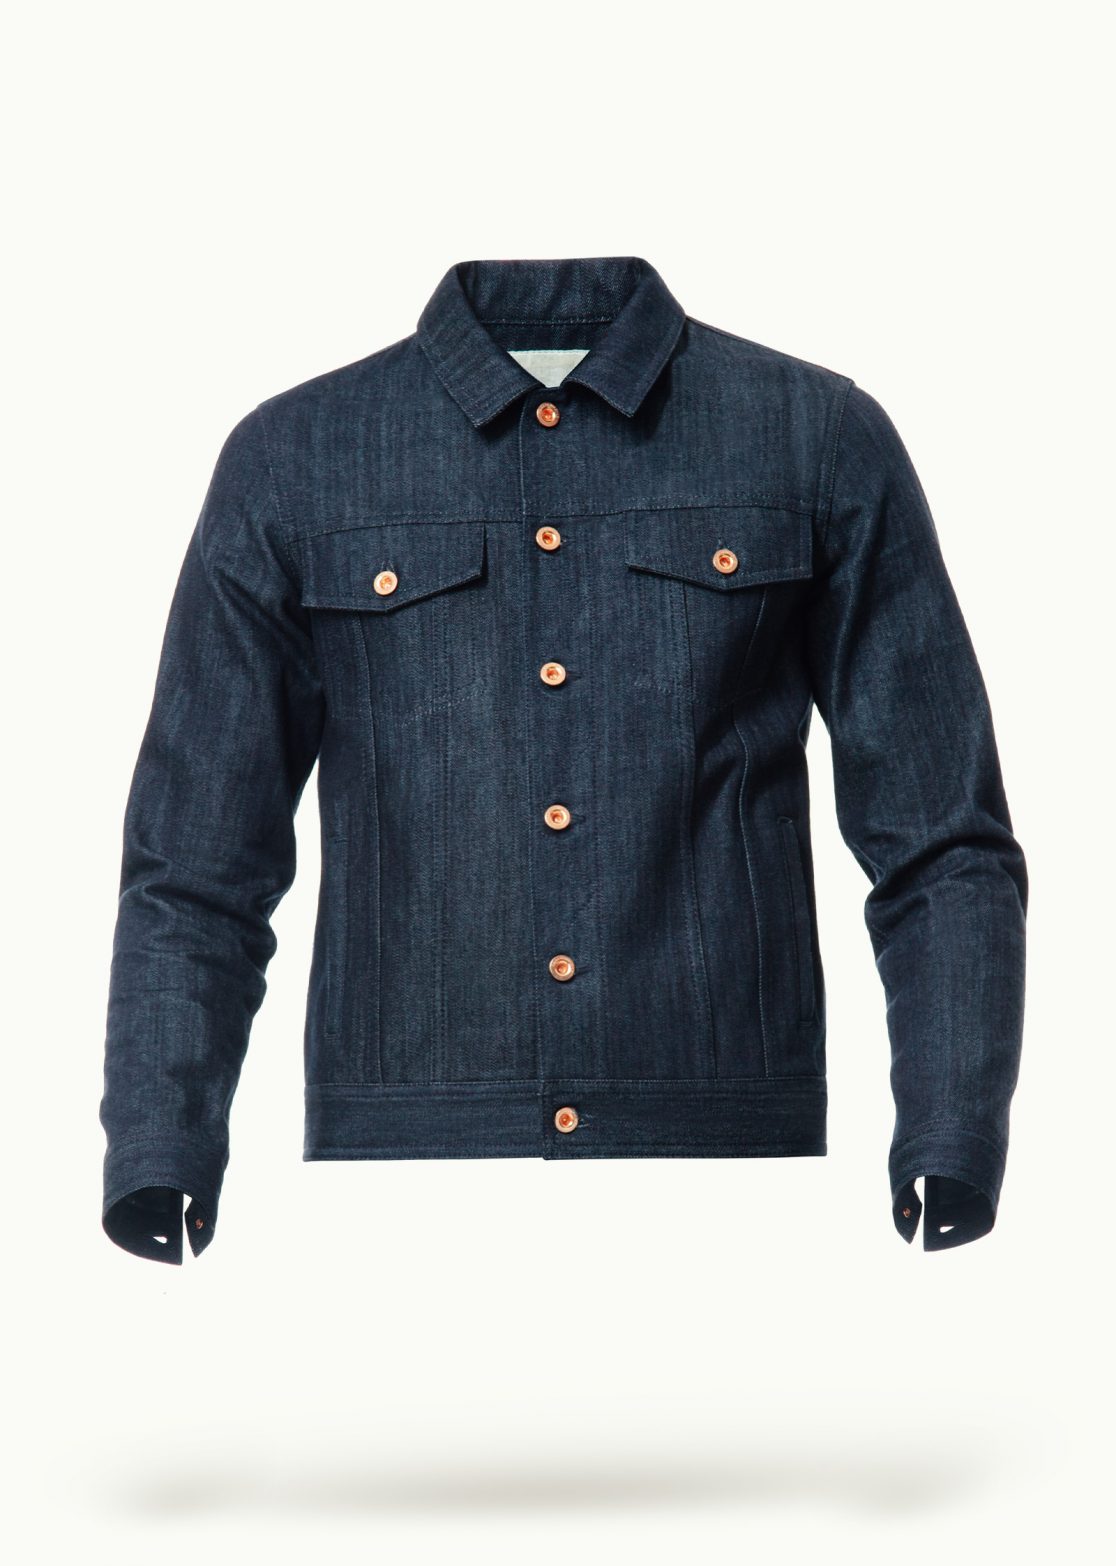 SALE - Men - Jackets - Denim - Outerwear - Clyde Denim Jacket 11oz Image Primary